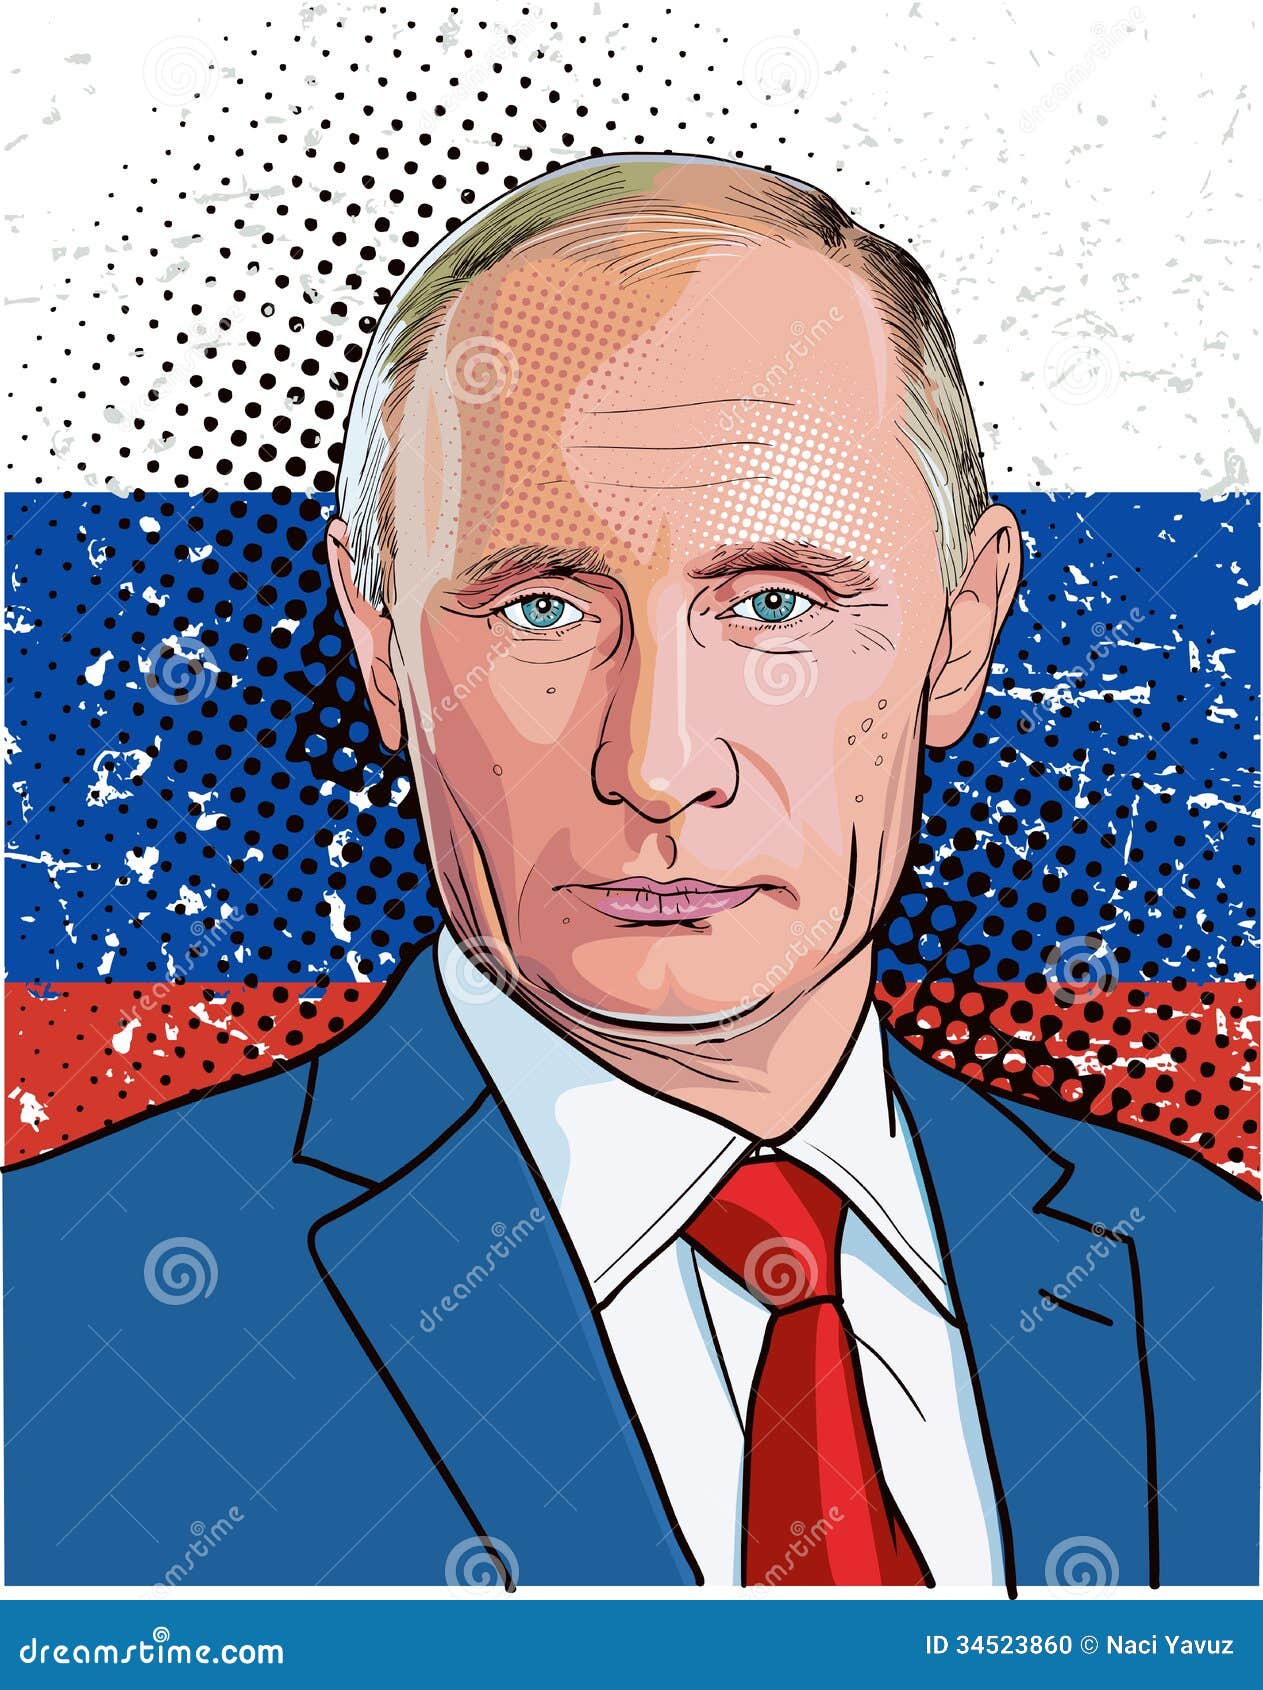 vladimir-putin-president-russia-vladimirovich-president-russia-position-has-held-may-previously-served-34523860.jpg